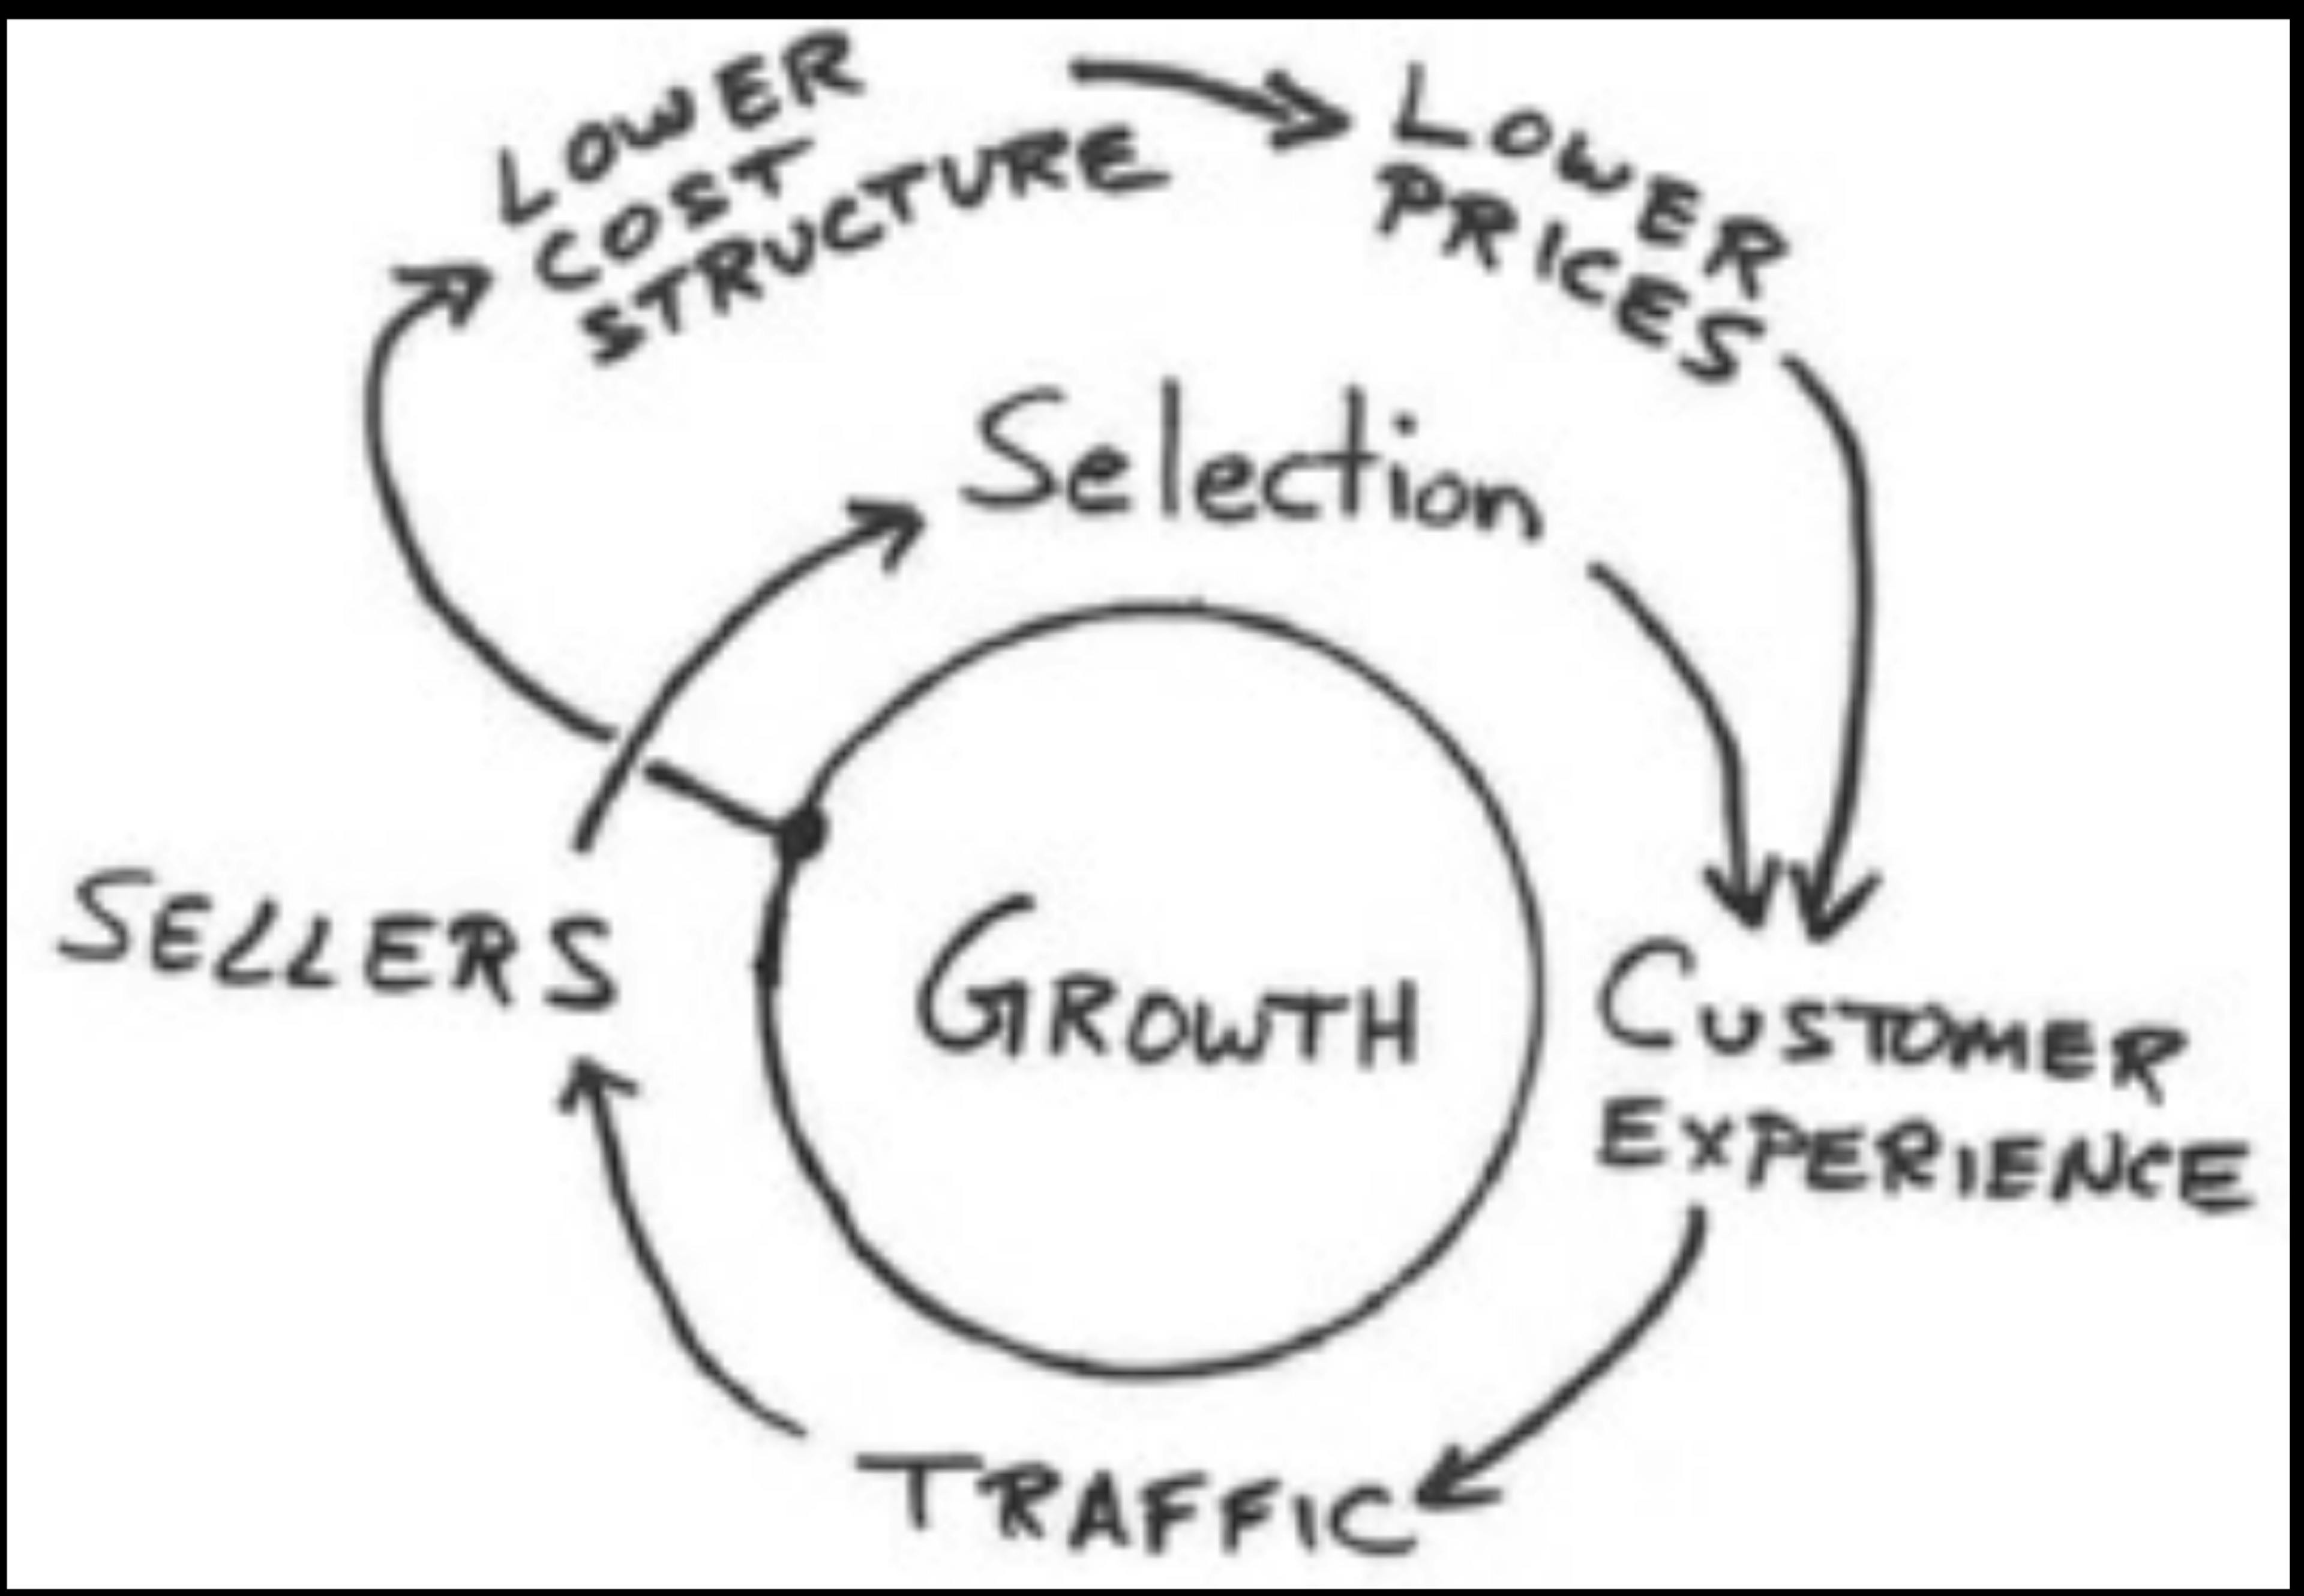 The infamous Jeff Bezos flywheel napkin illustration focusing on input metrics for growth. Illustration from Working Backwards